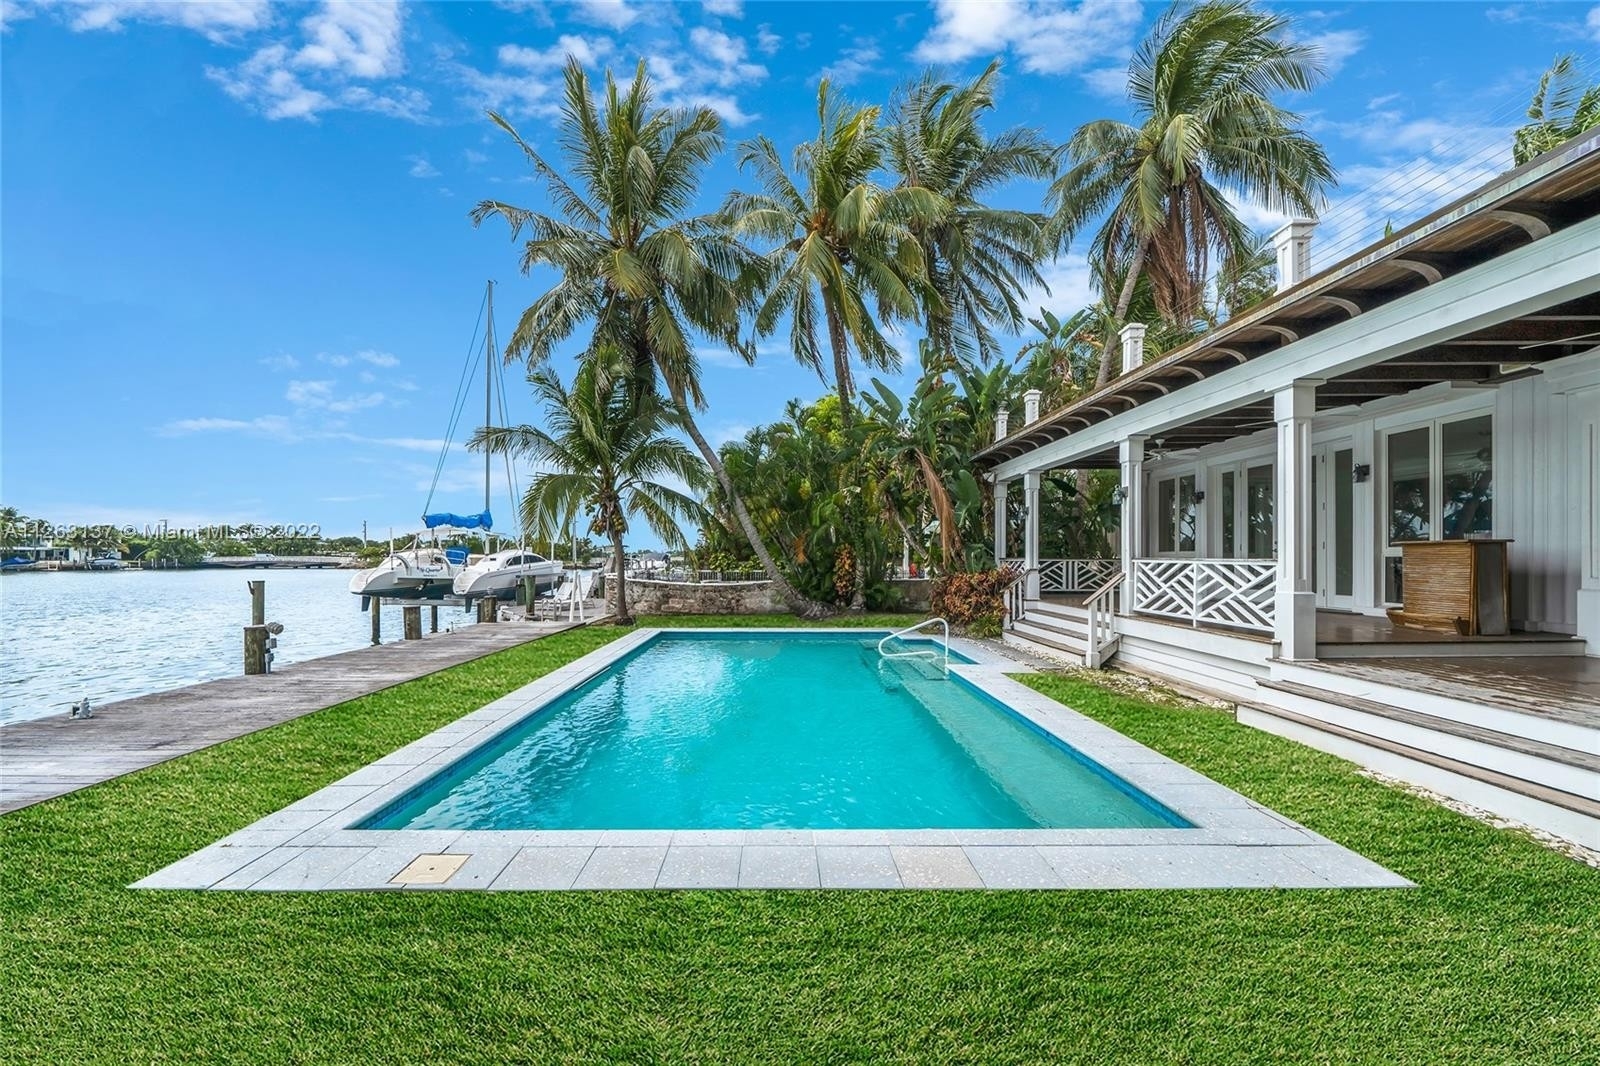 Single Family Home for Sale at South Beach, Miami Beach, FL 33139